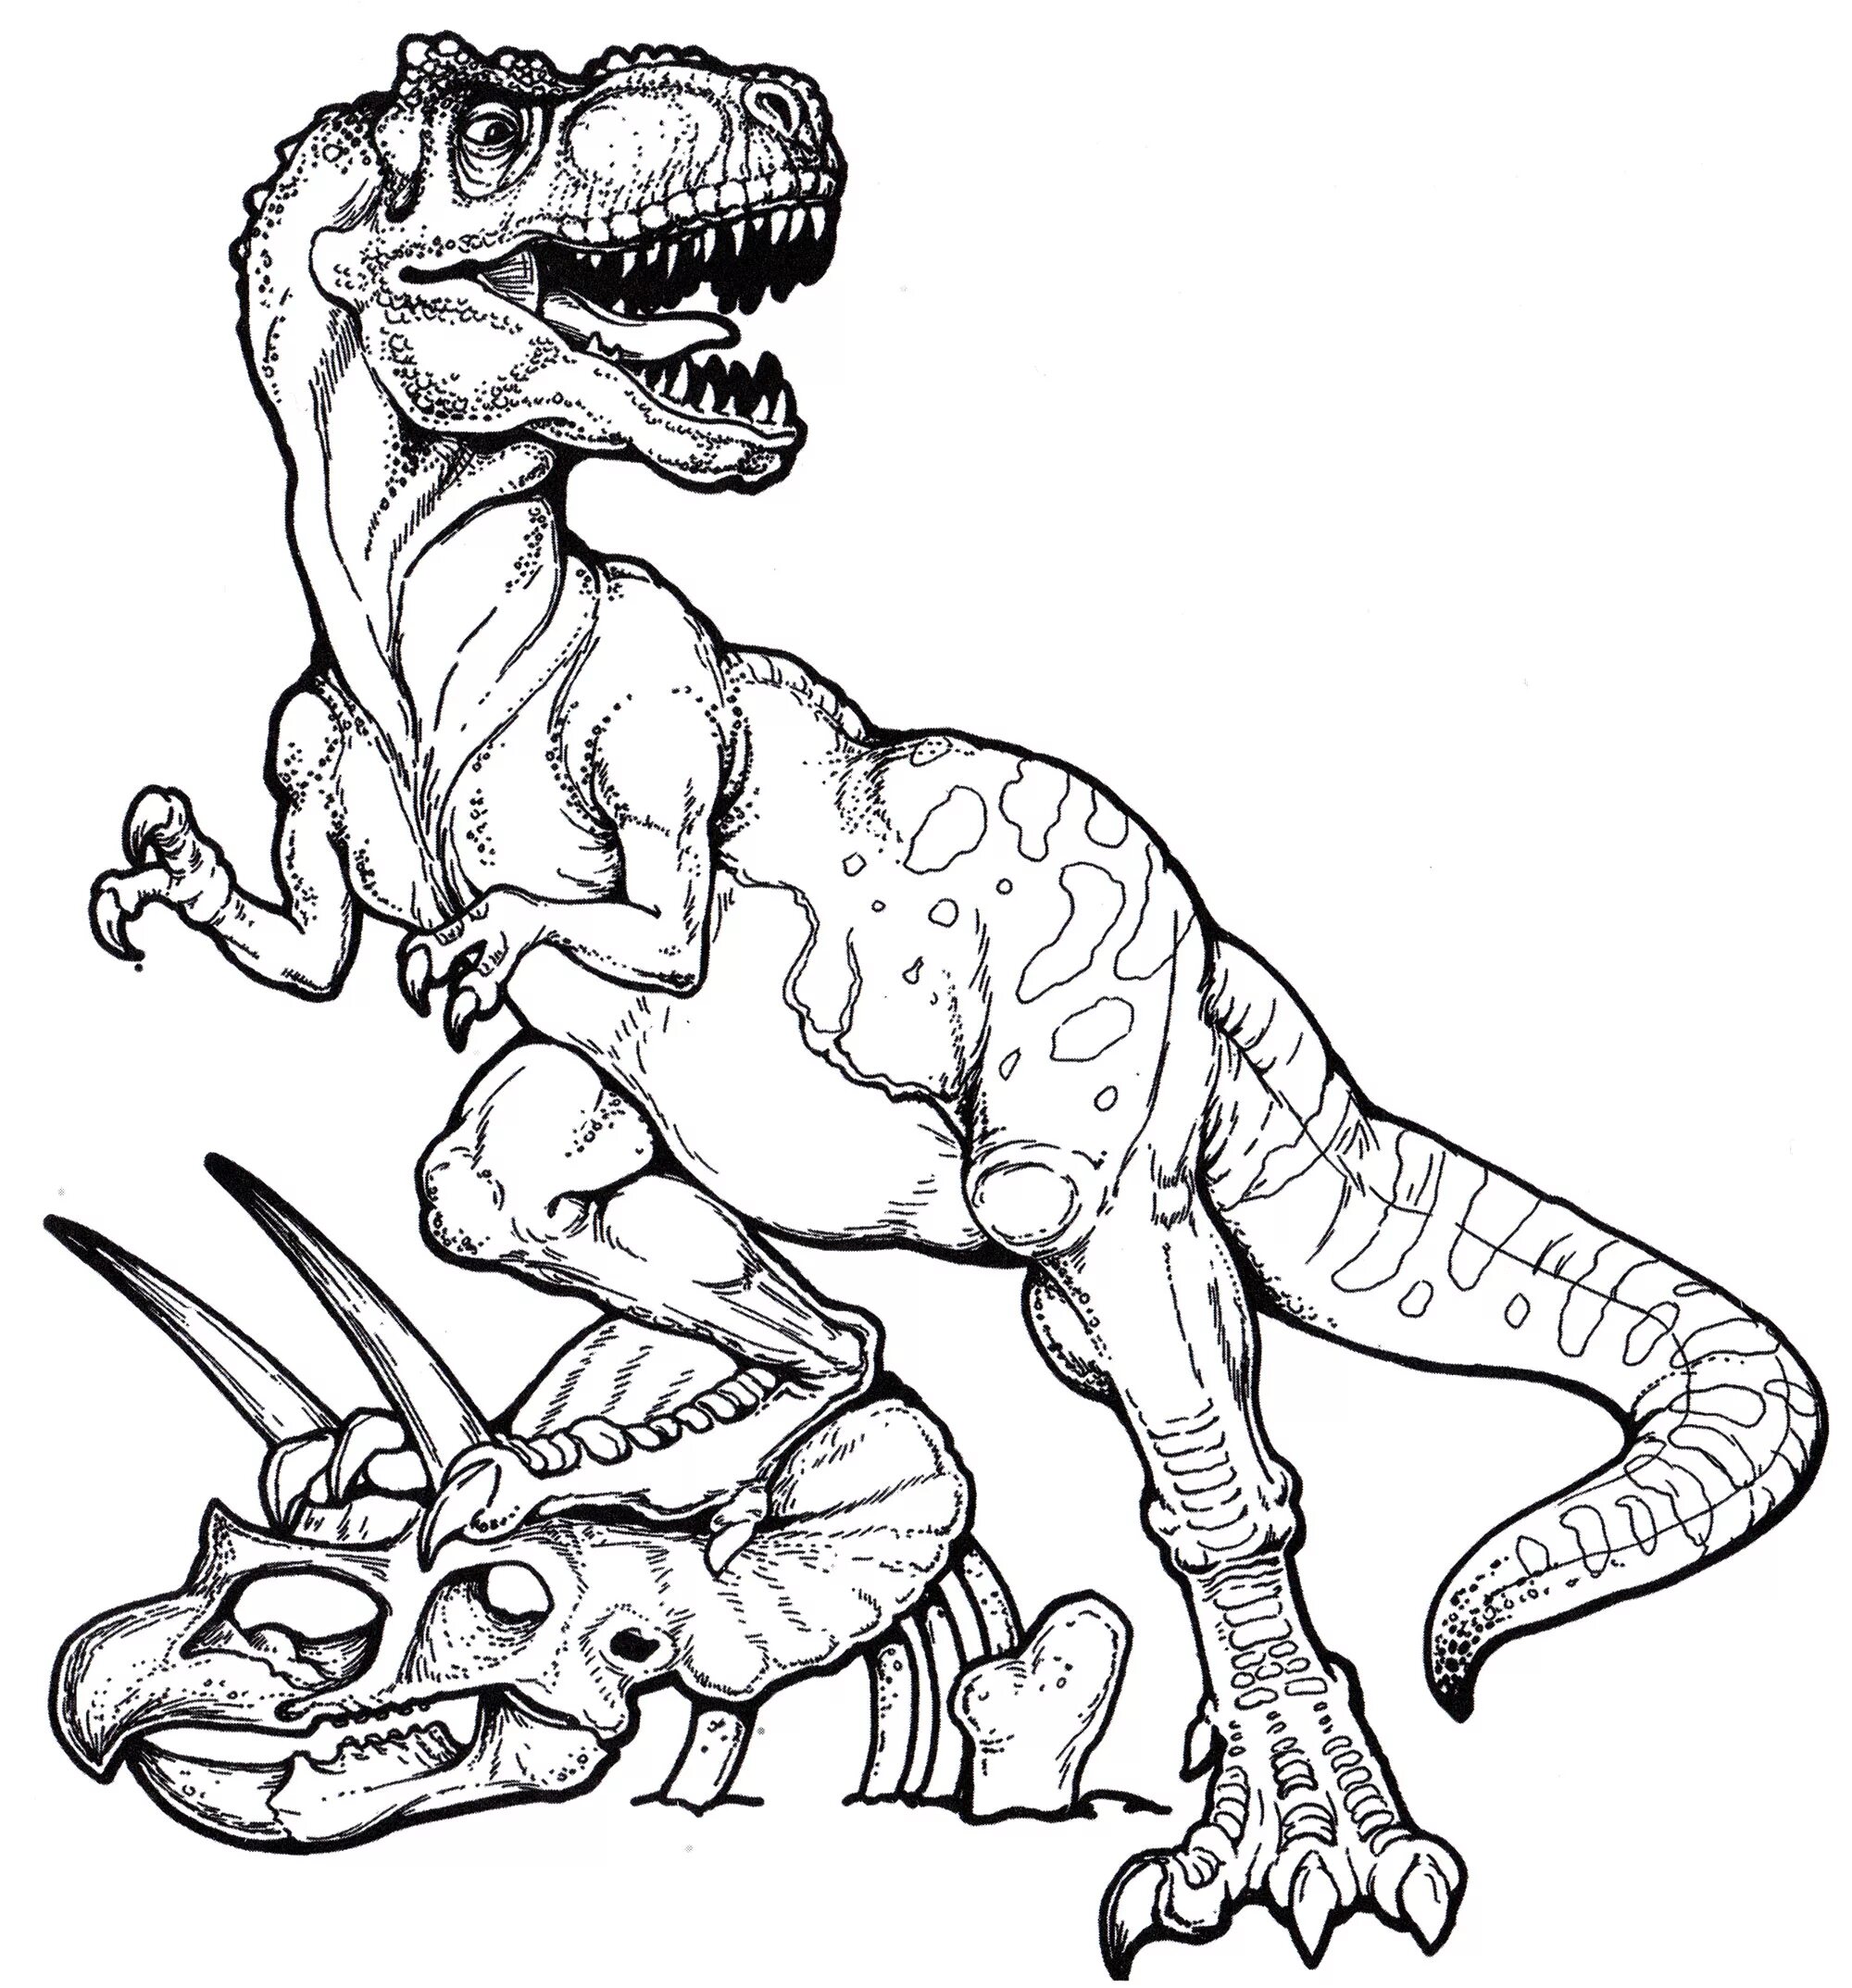 Tyrannosaurus rex spectacular seal coloring page